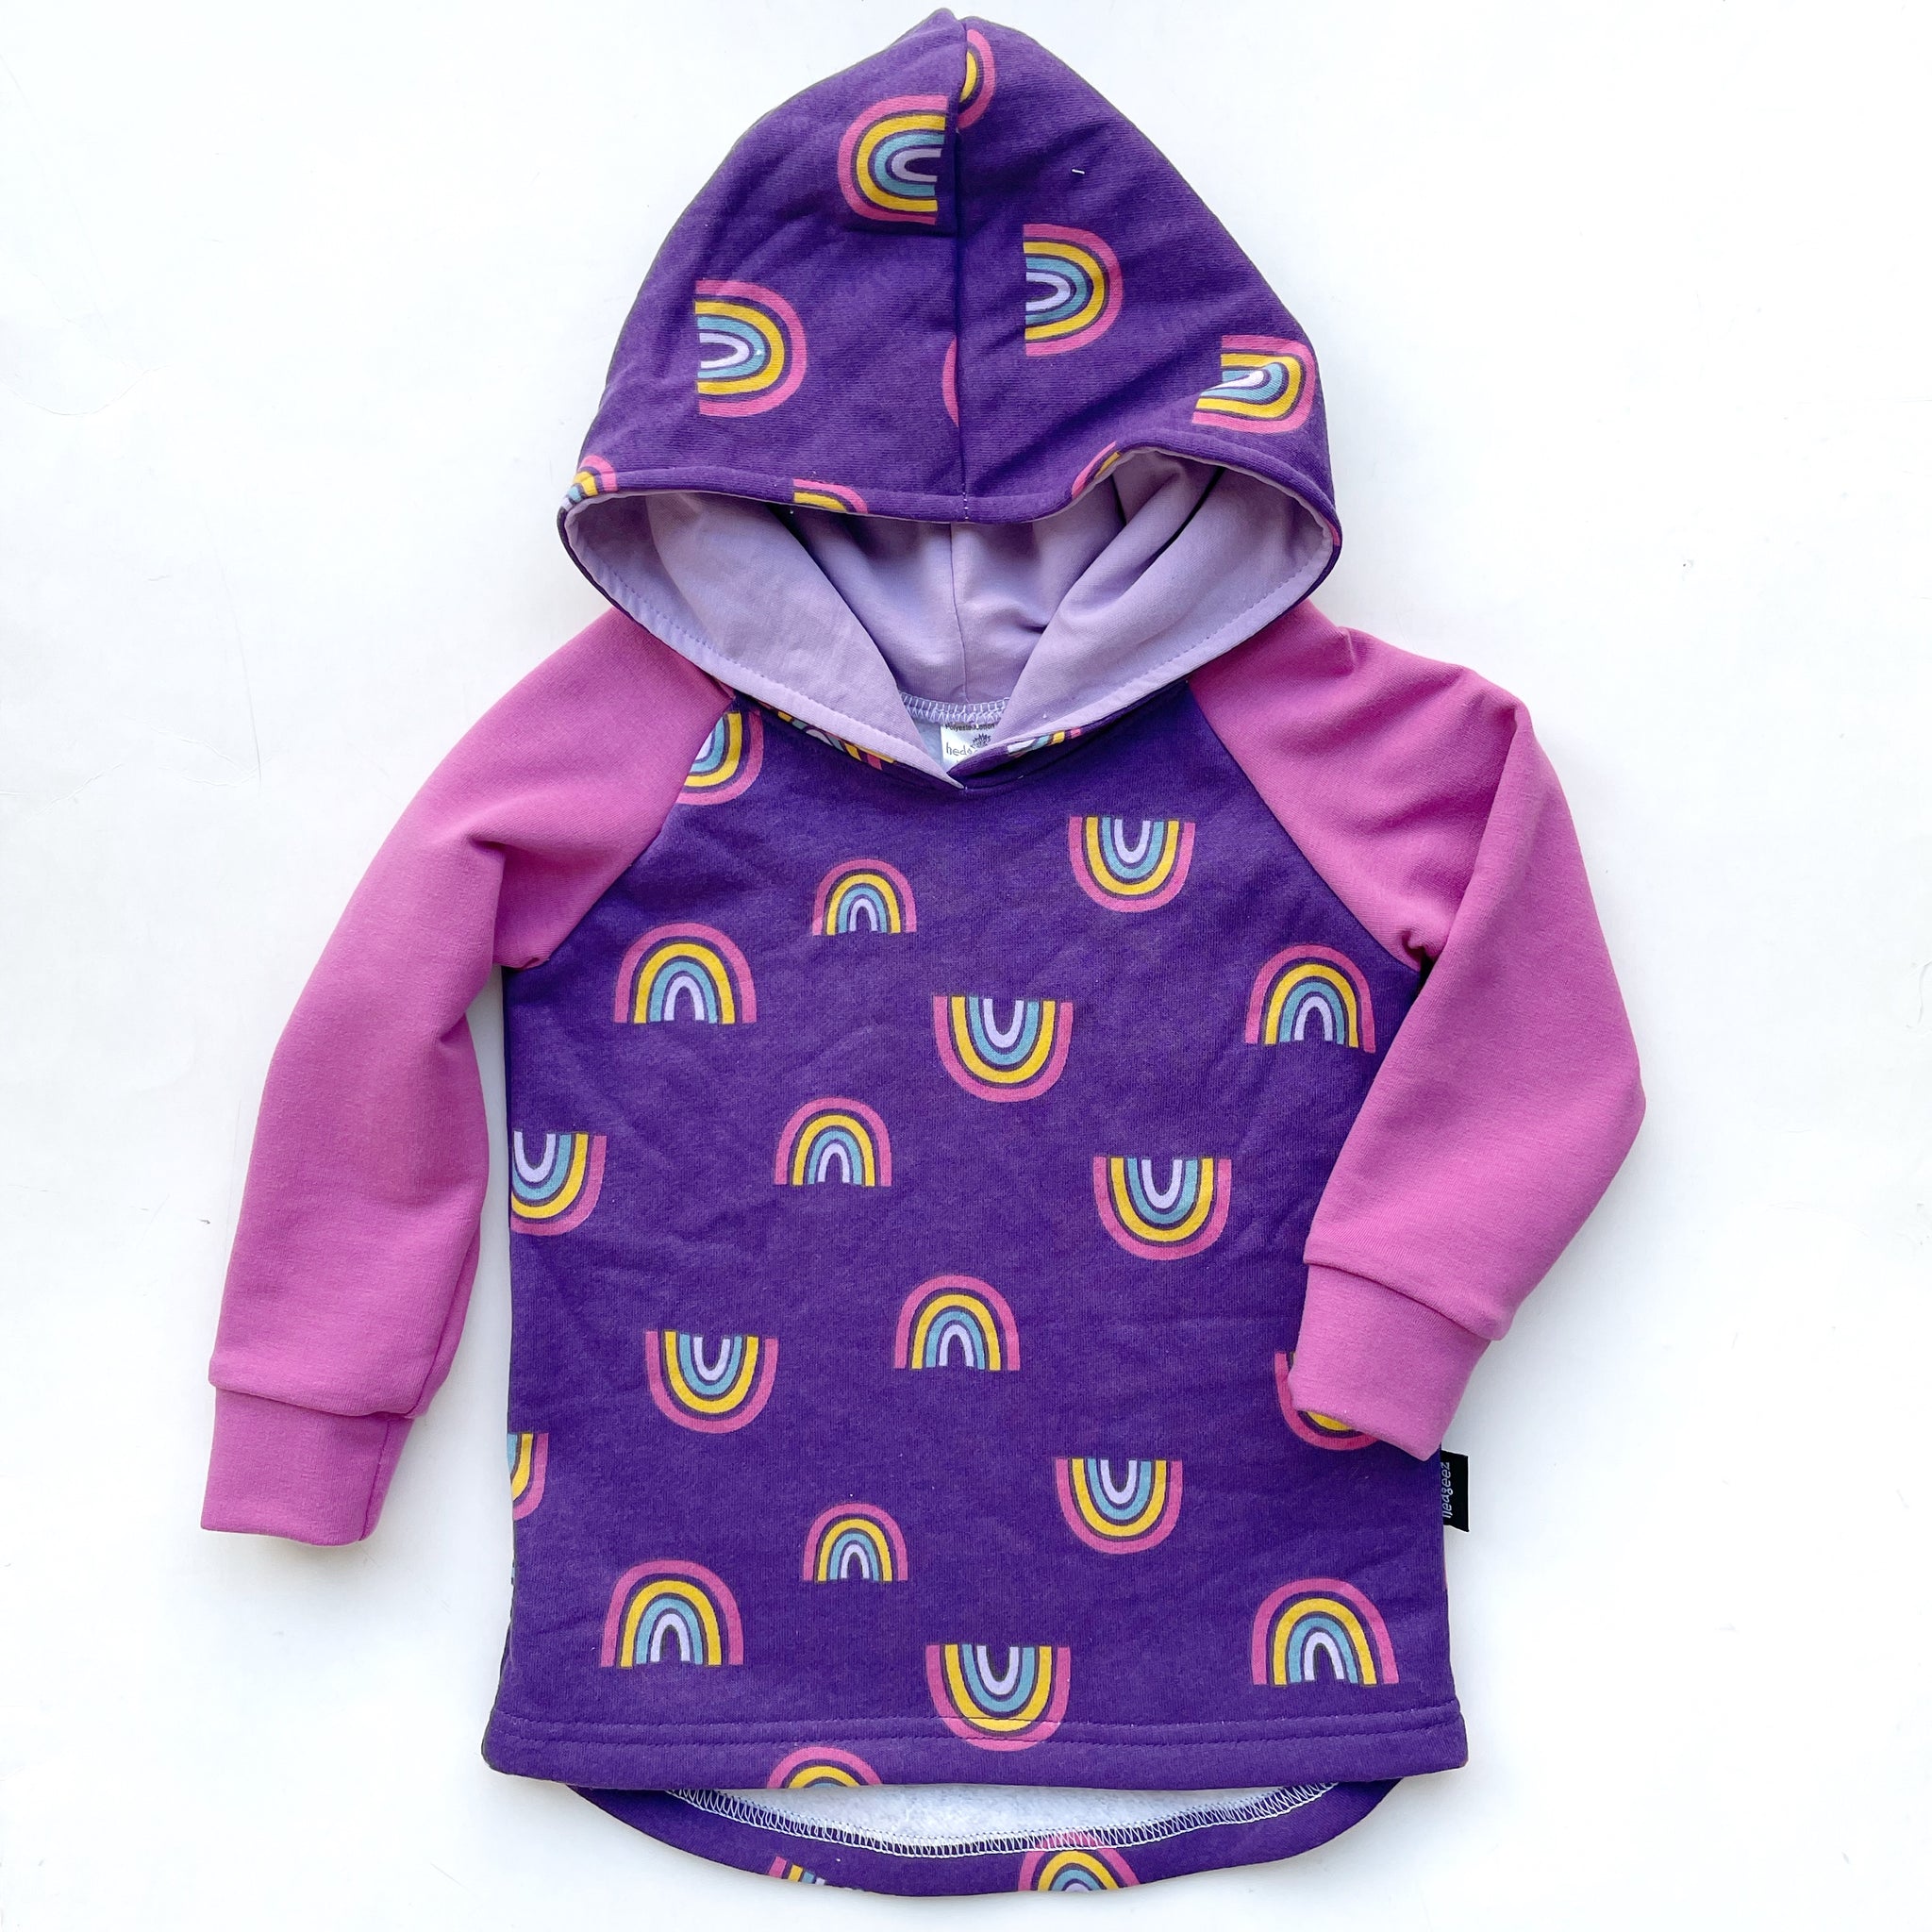 Purple Rainbow Hoodie - Size 2